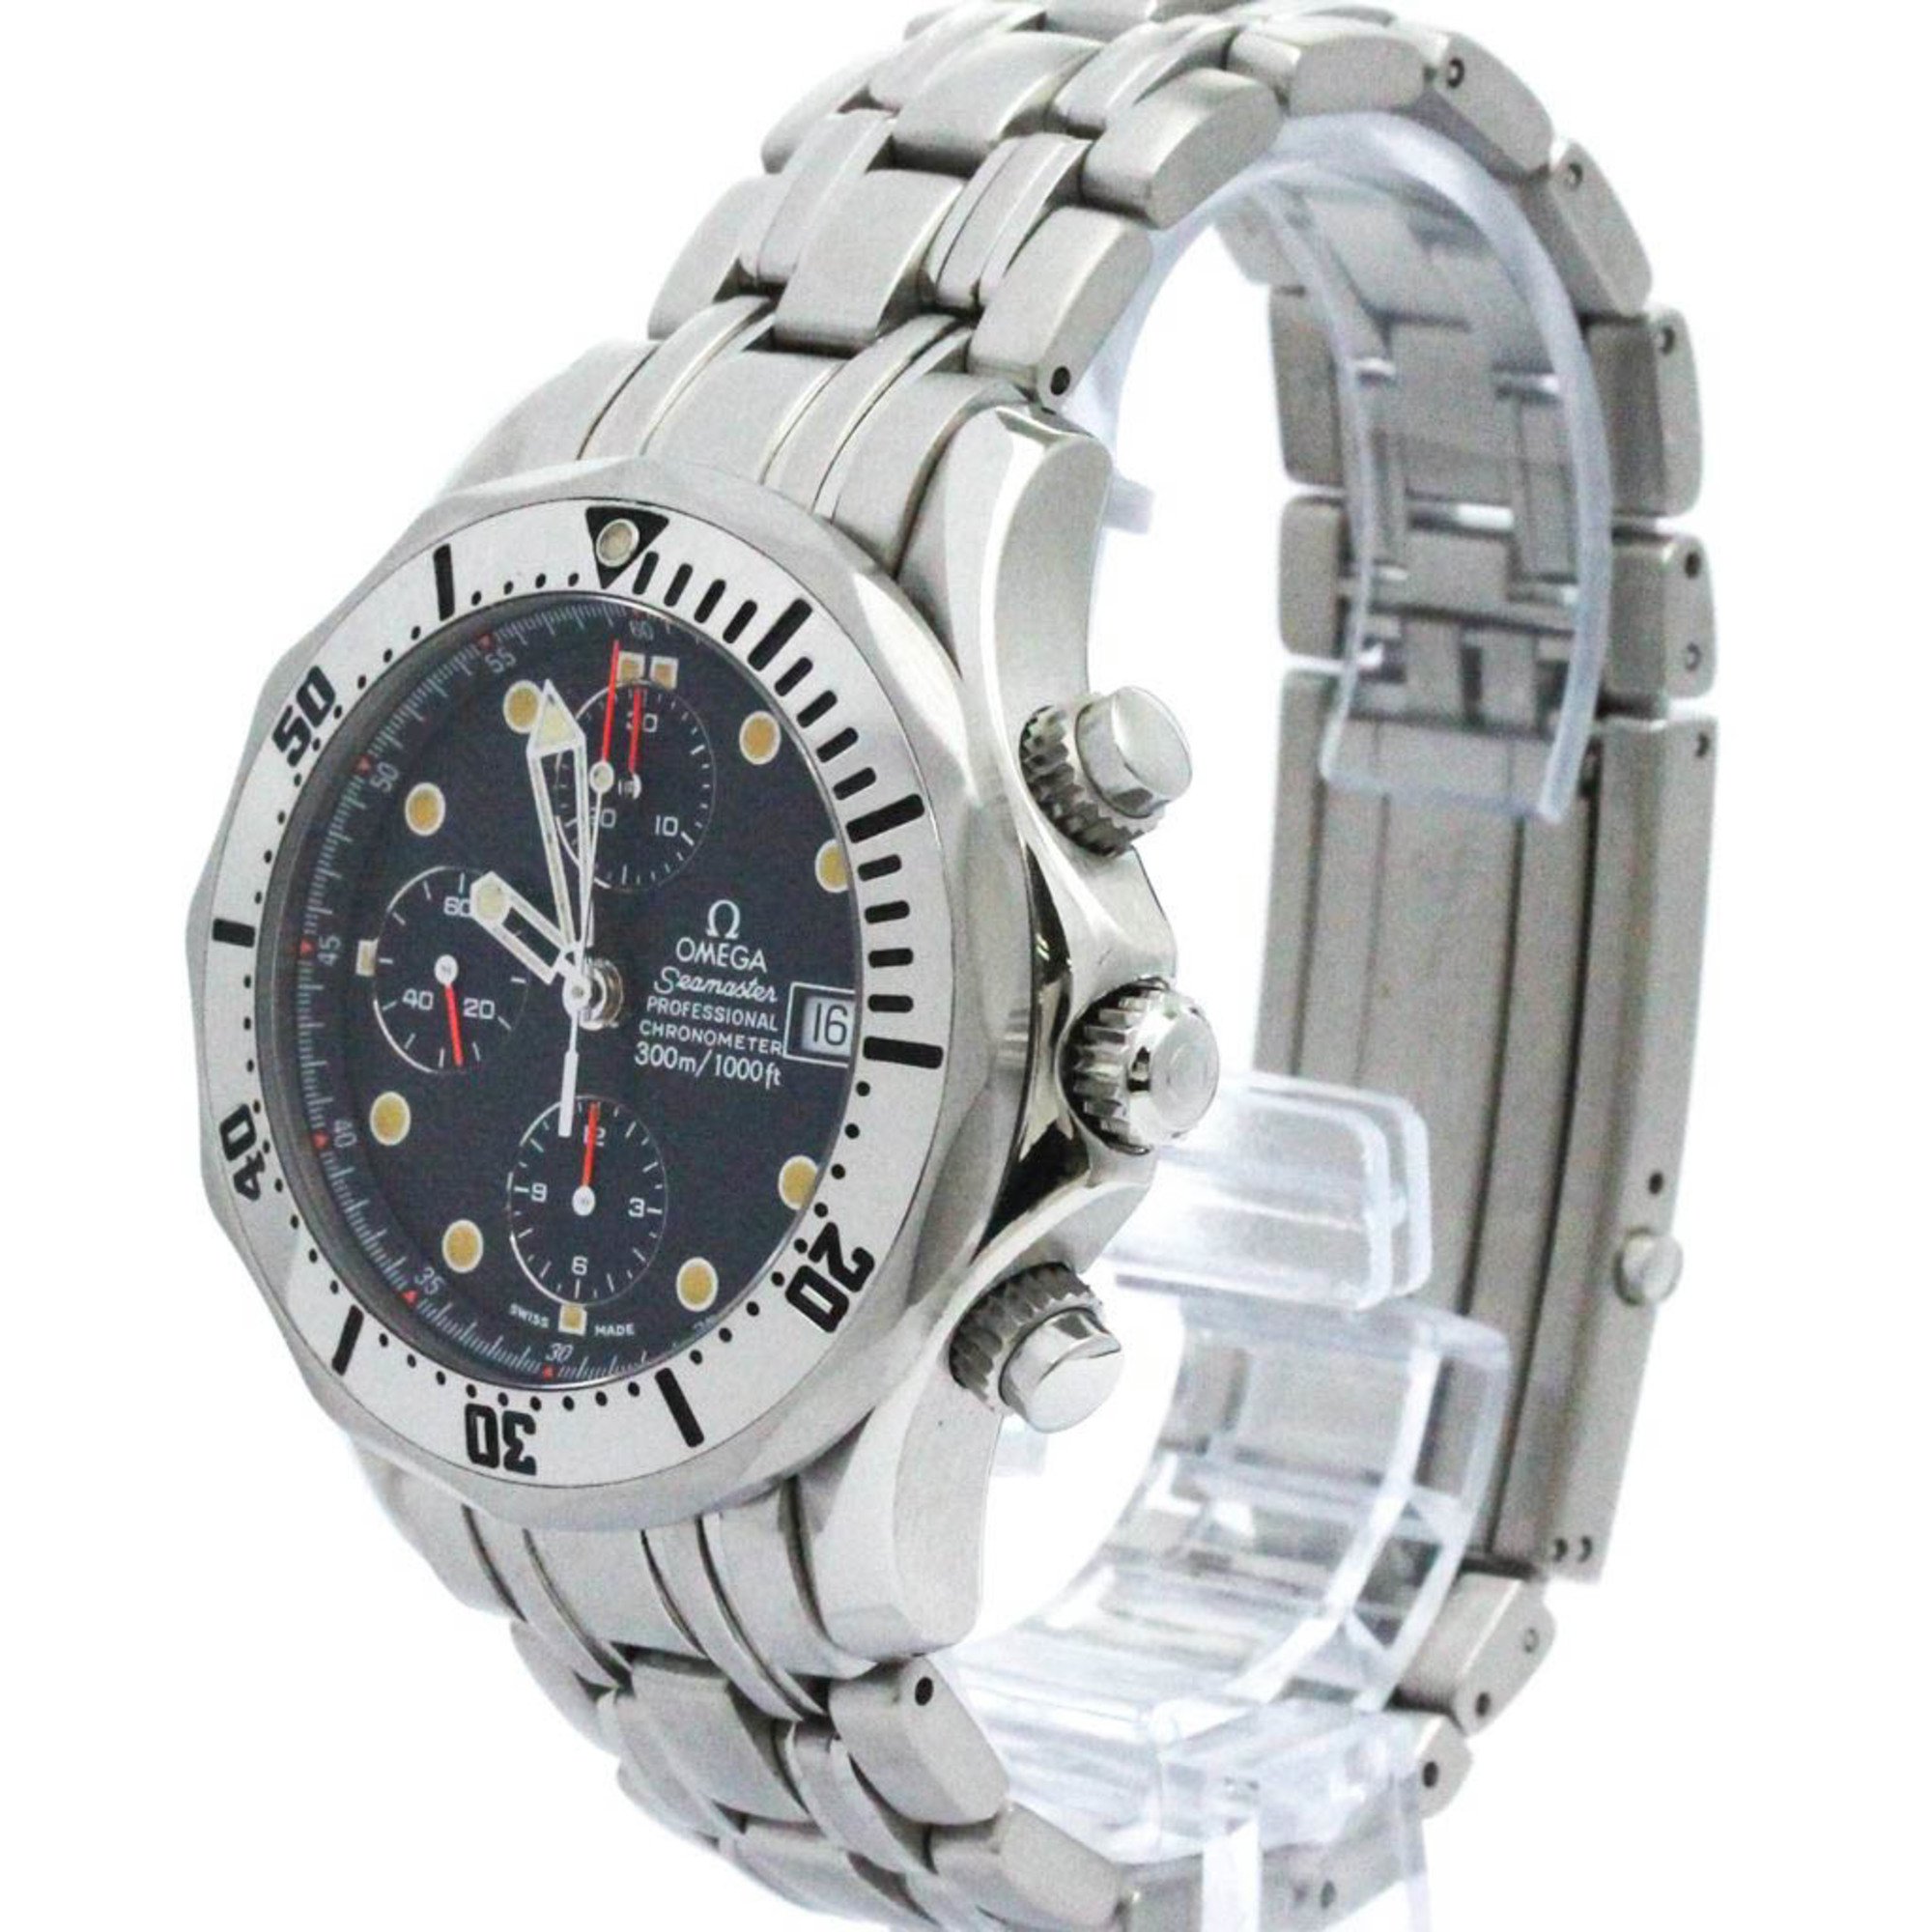 Polished OMEGA Seamaster Professional 300M Chronograph Watch 2598.80 BF563957